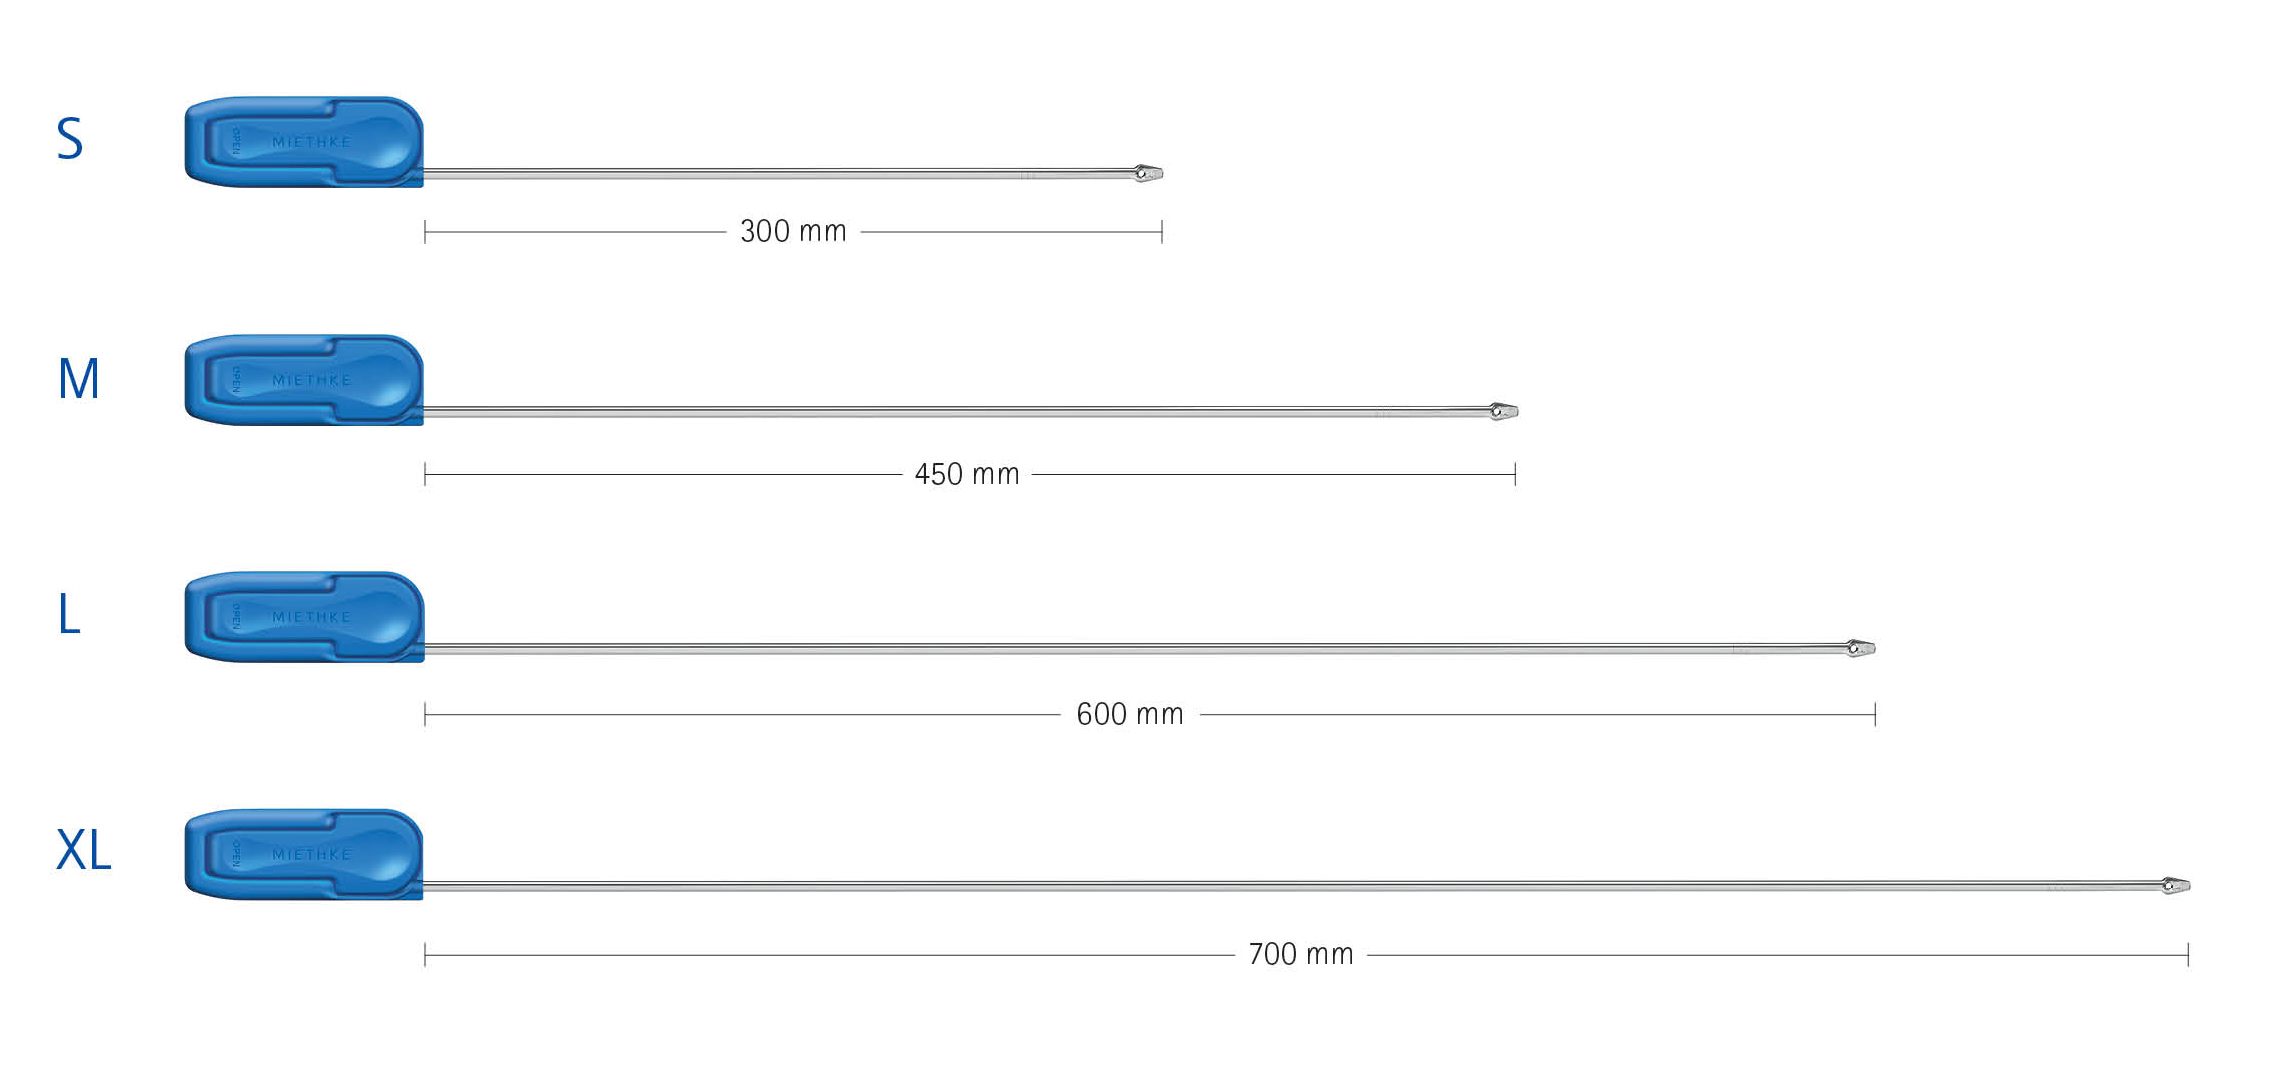 miethke-shunt-tunneller-sizes.jpg